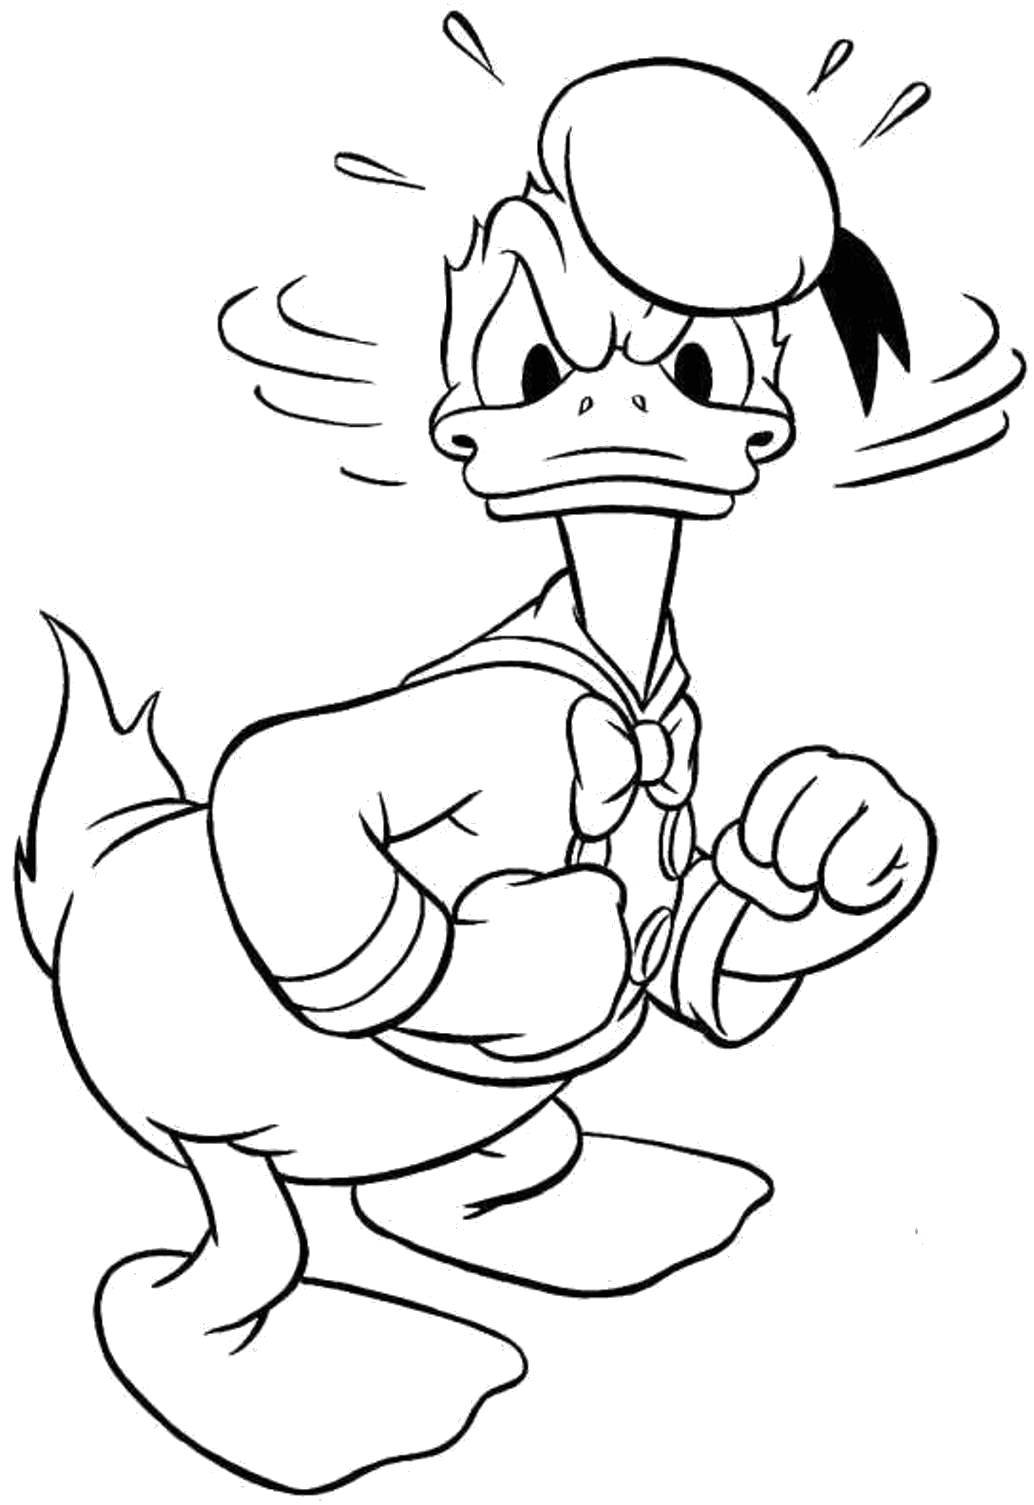 Coloring Evil Donald. Category cartoons. Tags:  Disney, Ducktales, Donald Duck.